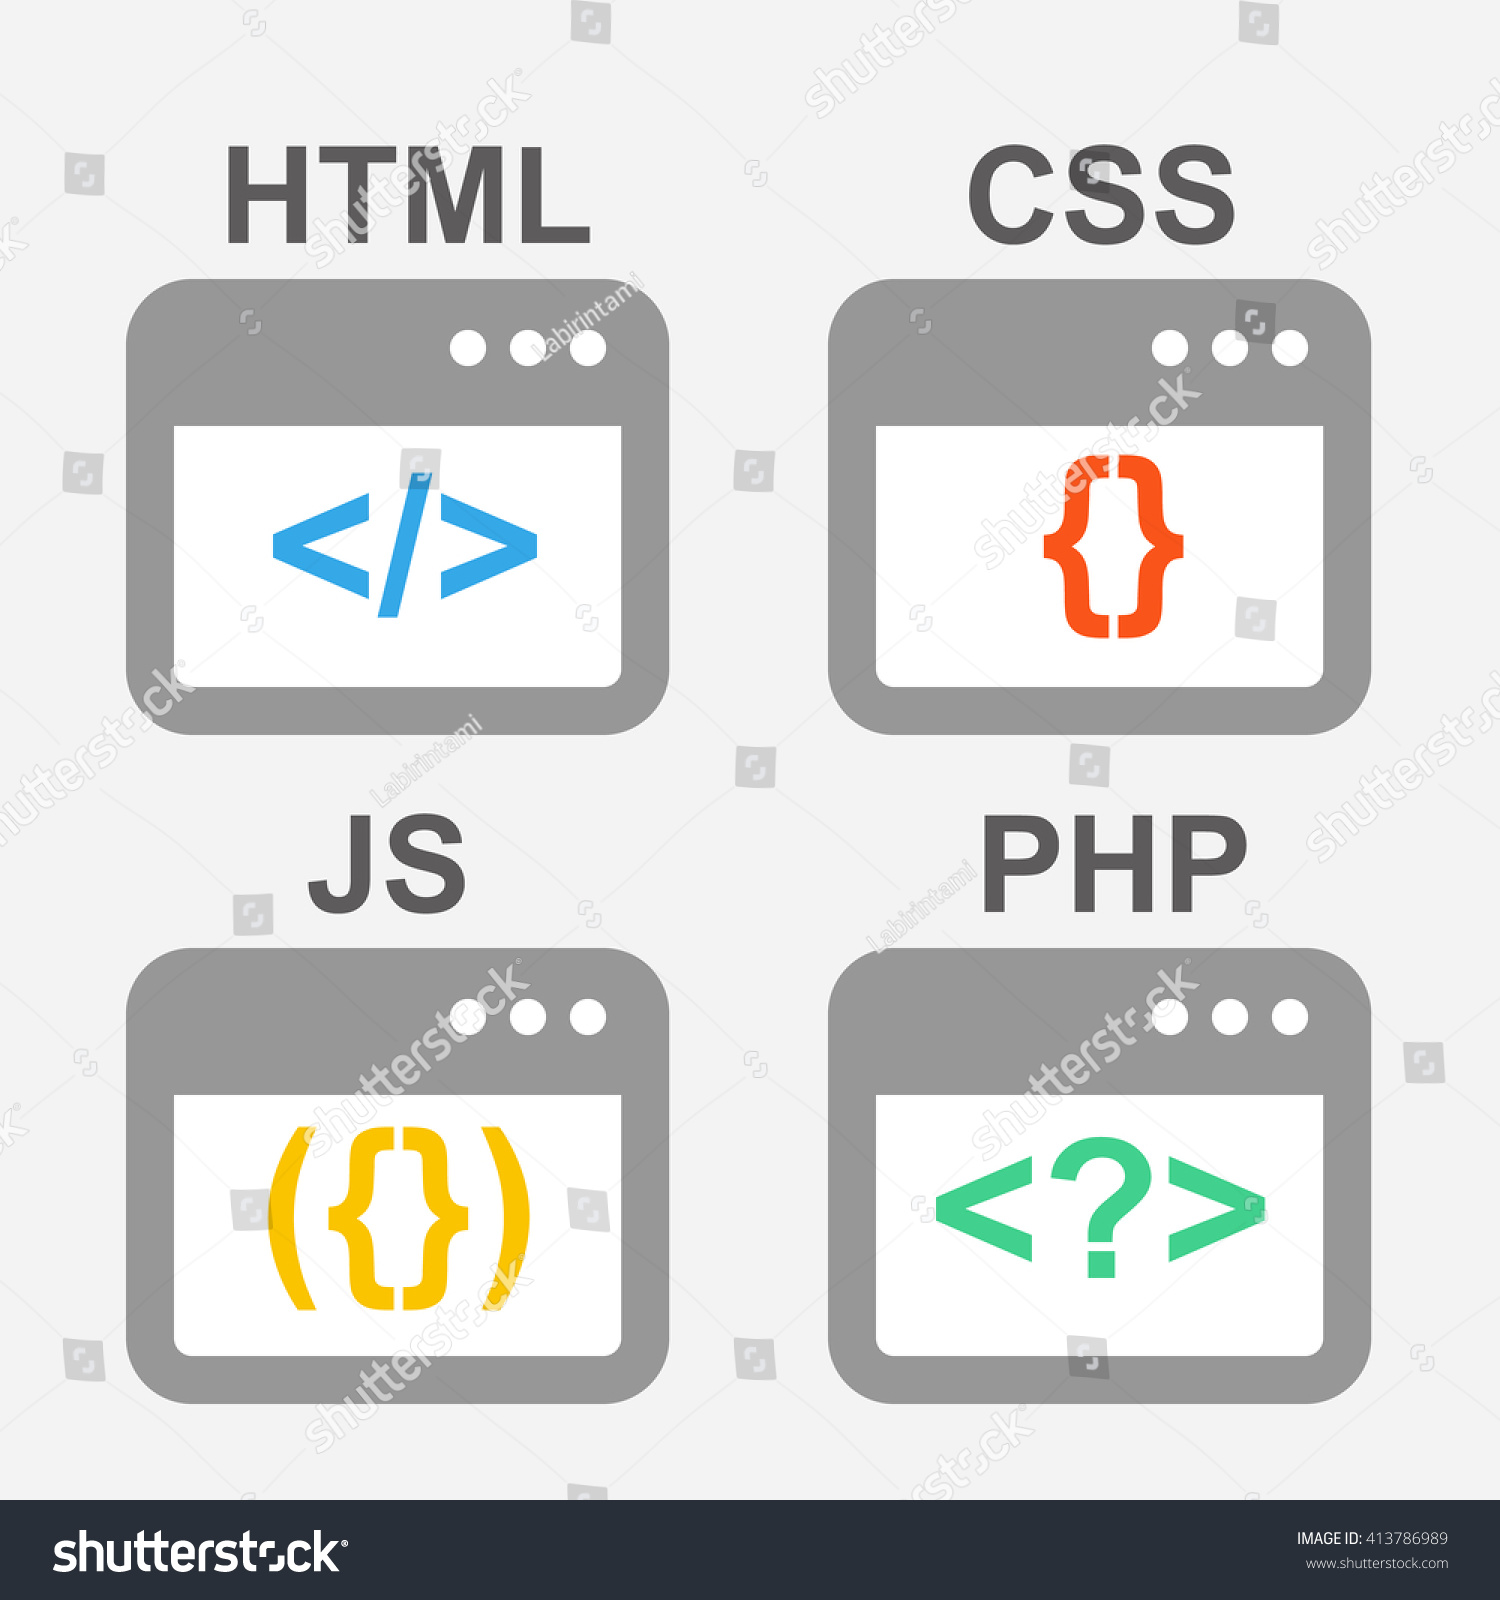 People symbols 27 premium icons (SVG, EPS, PSD, PNG files)